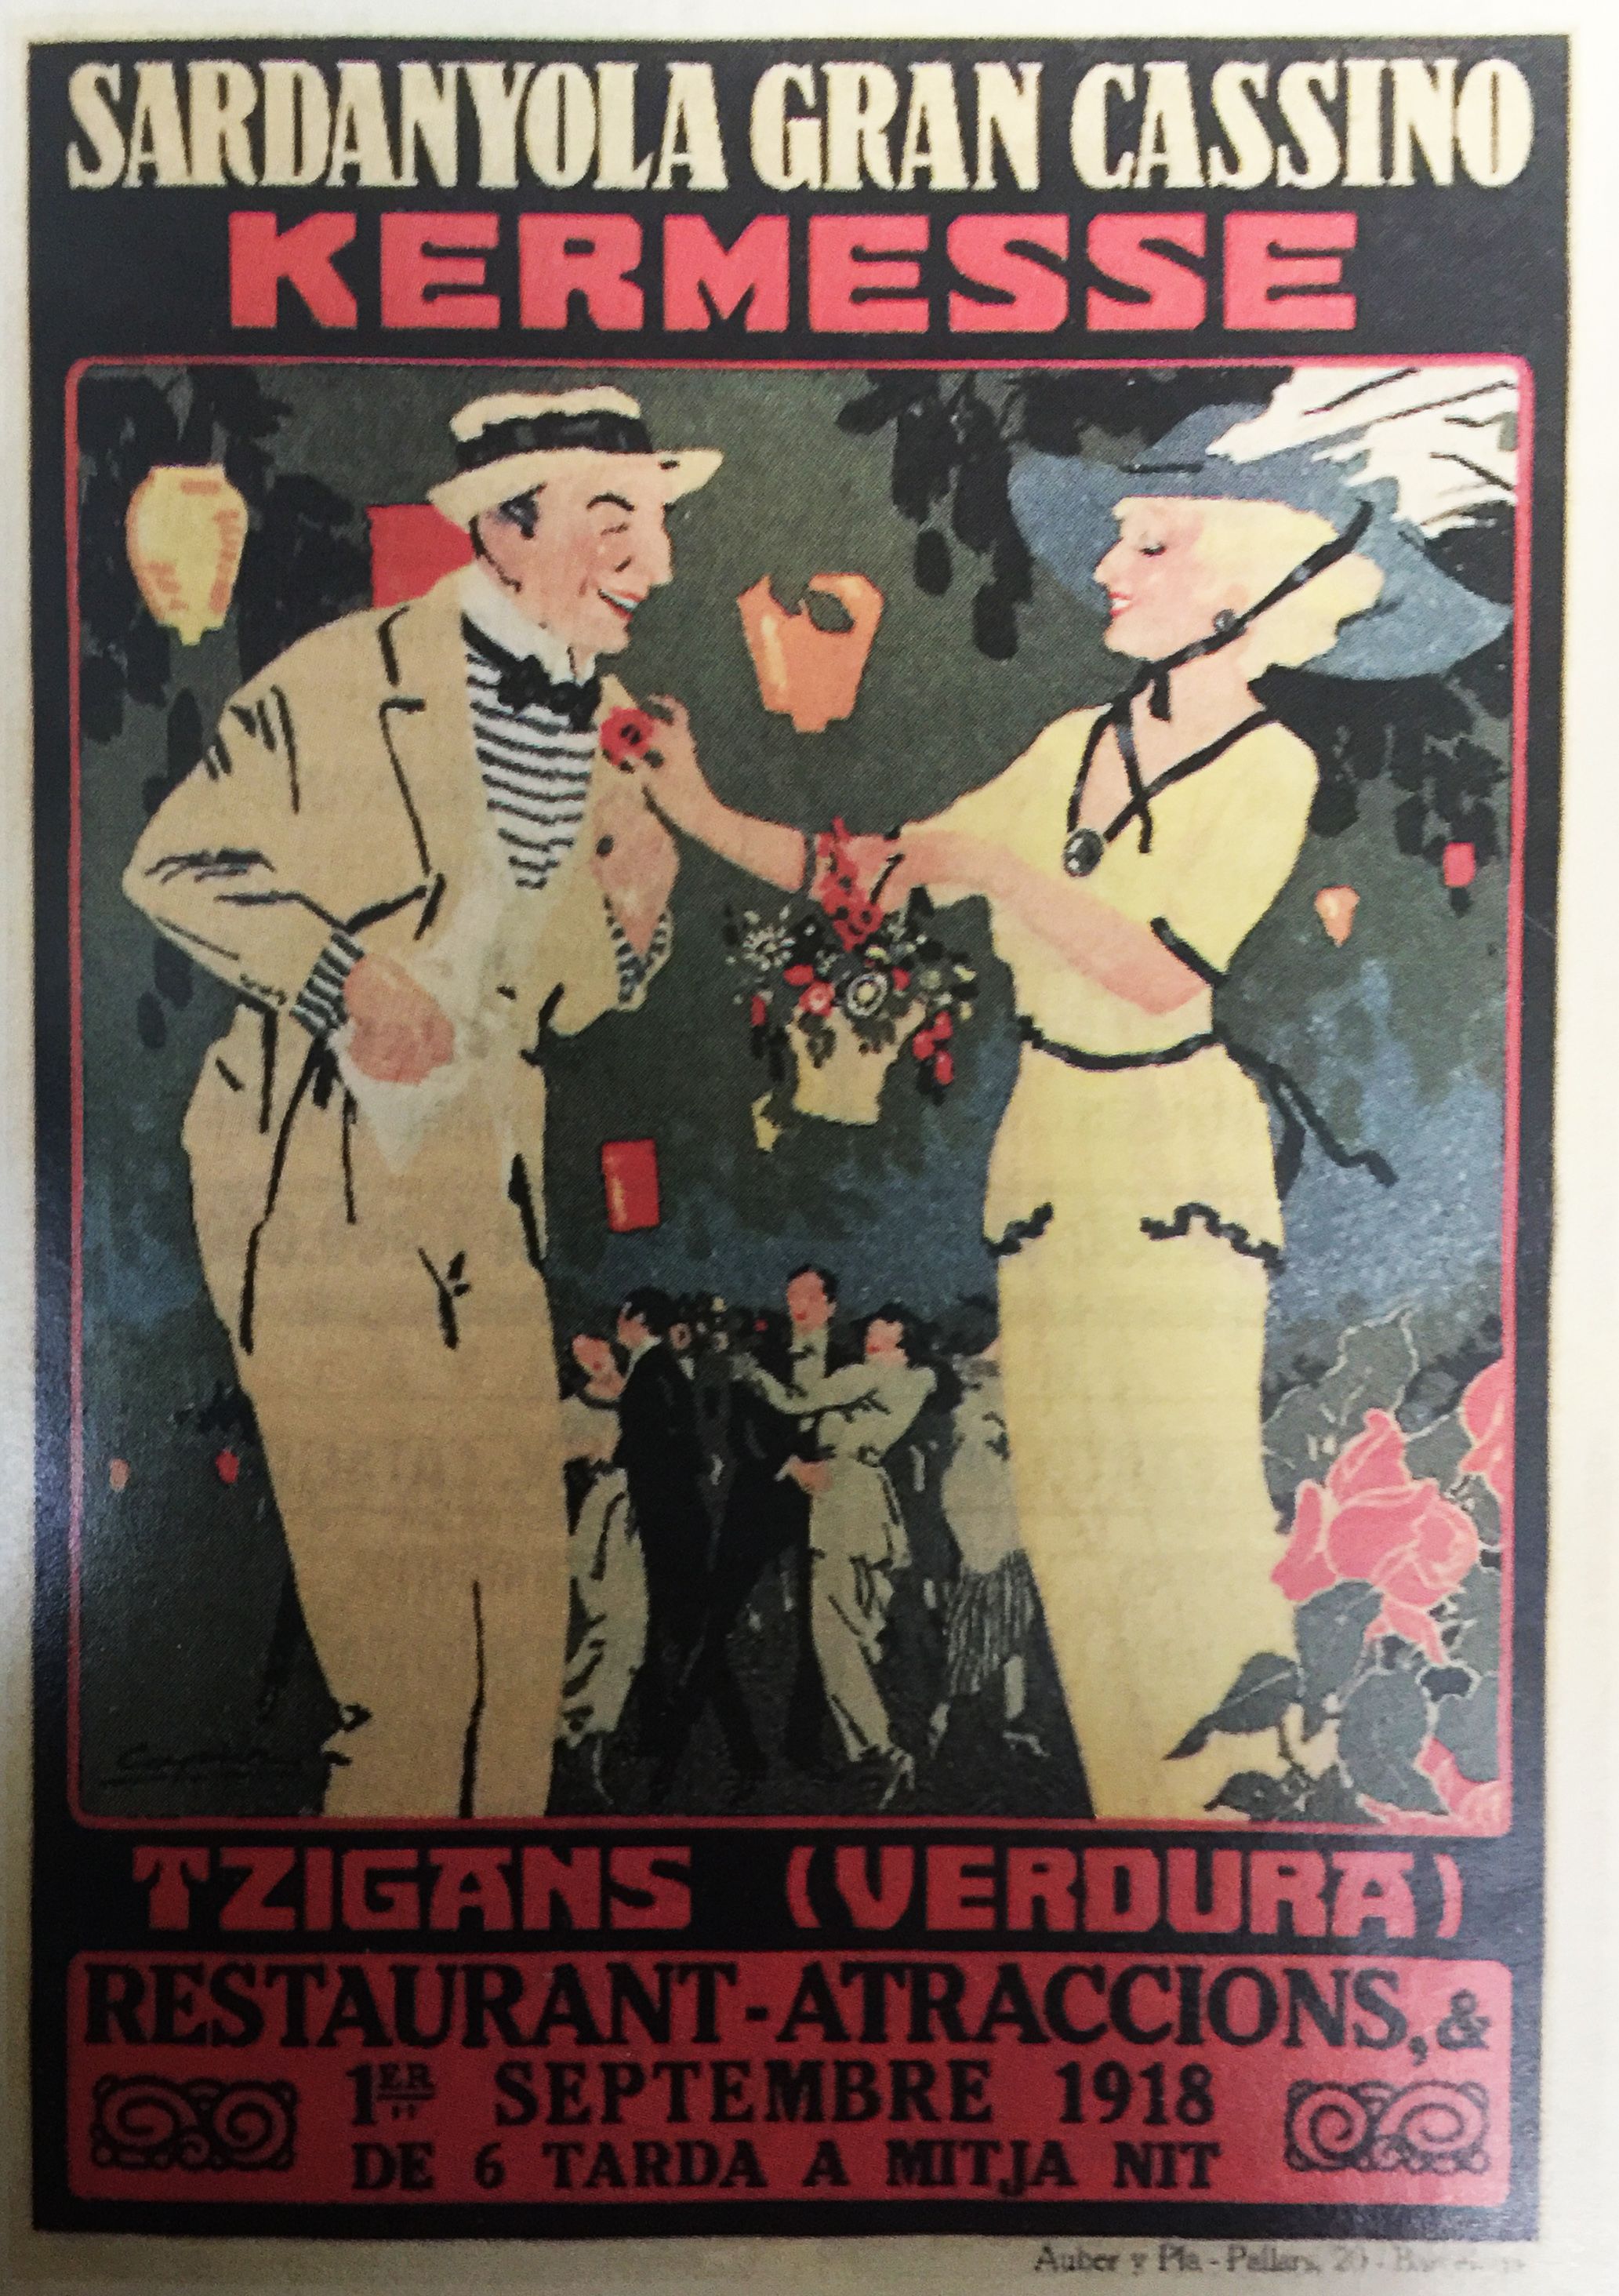 Cartell d'una festa al "Sardanyola, Gran Casino" (1918)